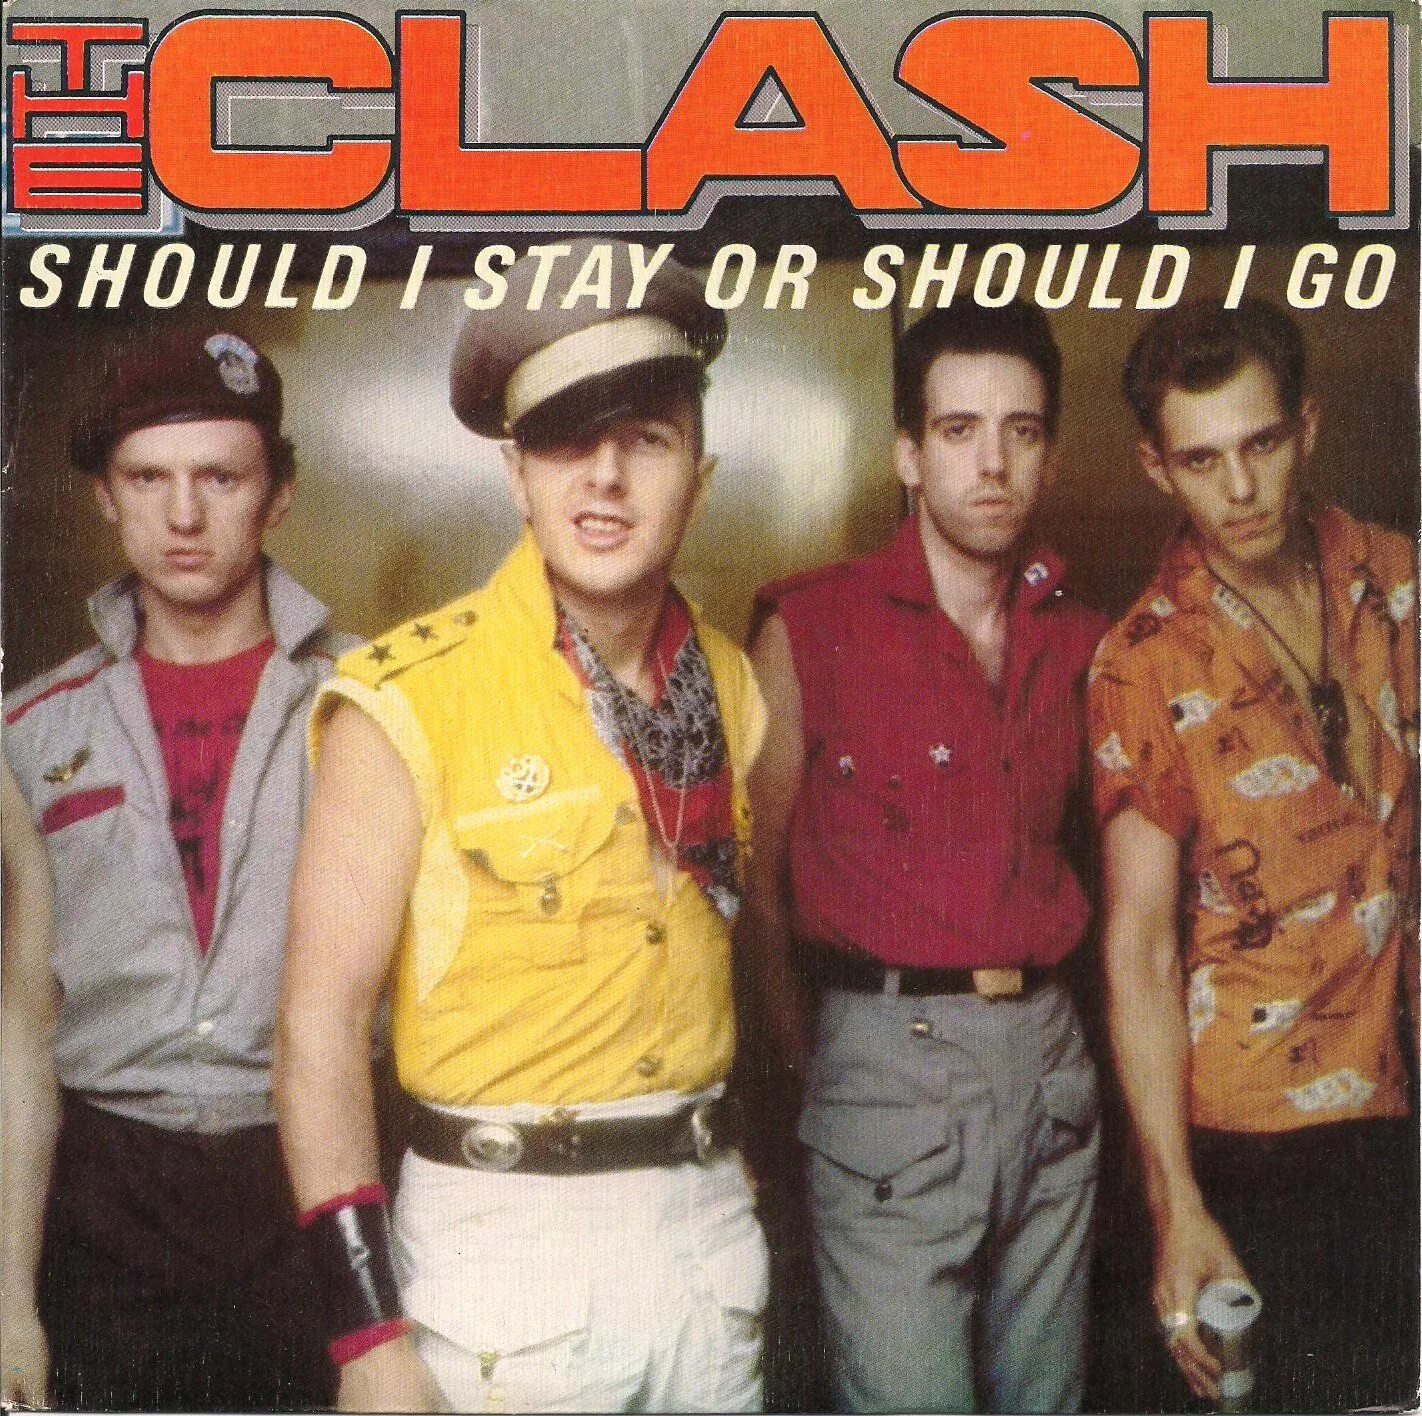 Should i stay or should i go. Should i stay or should i go обложка. The Clash should i stay or go. The Clash should i stay or should i. Песня should i stay